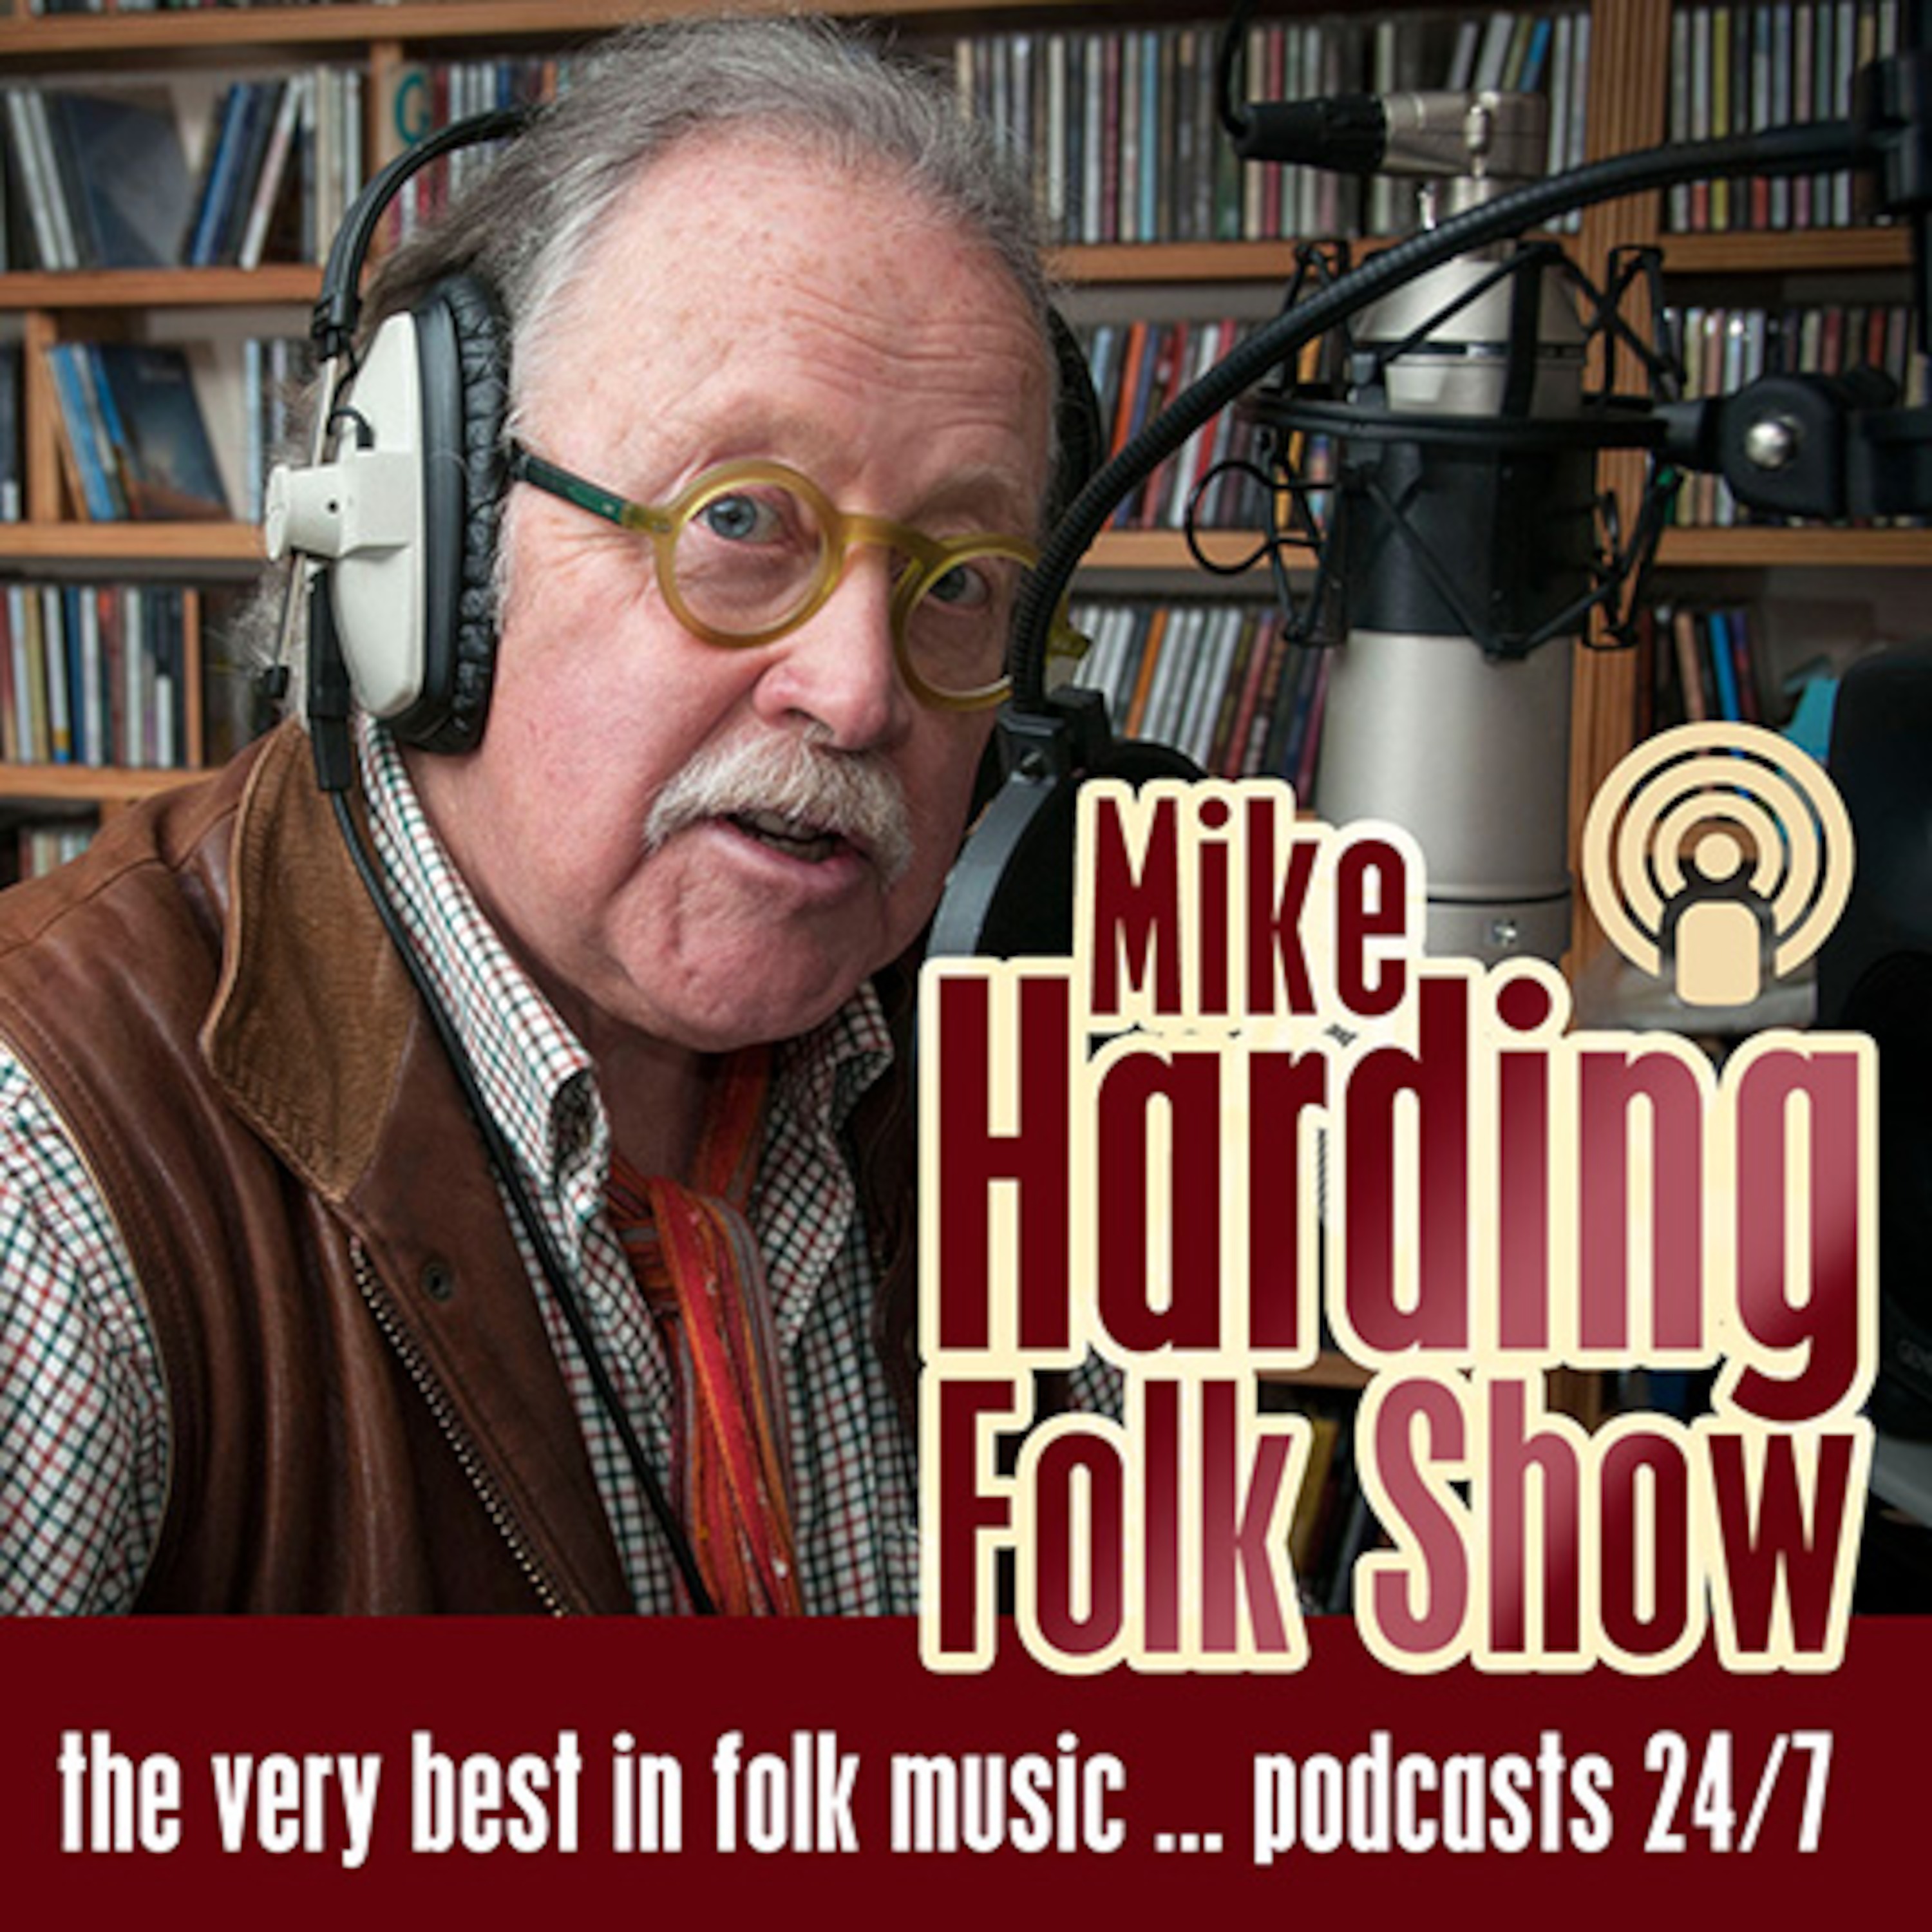 Mike Harding Folk Show 265